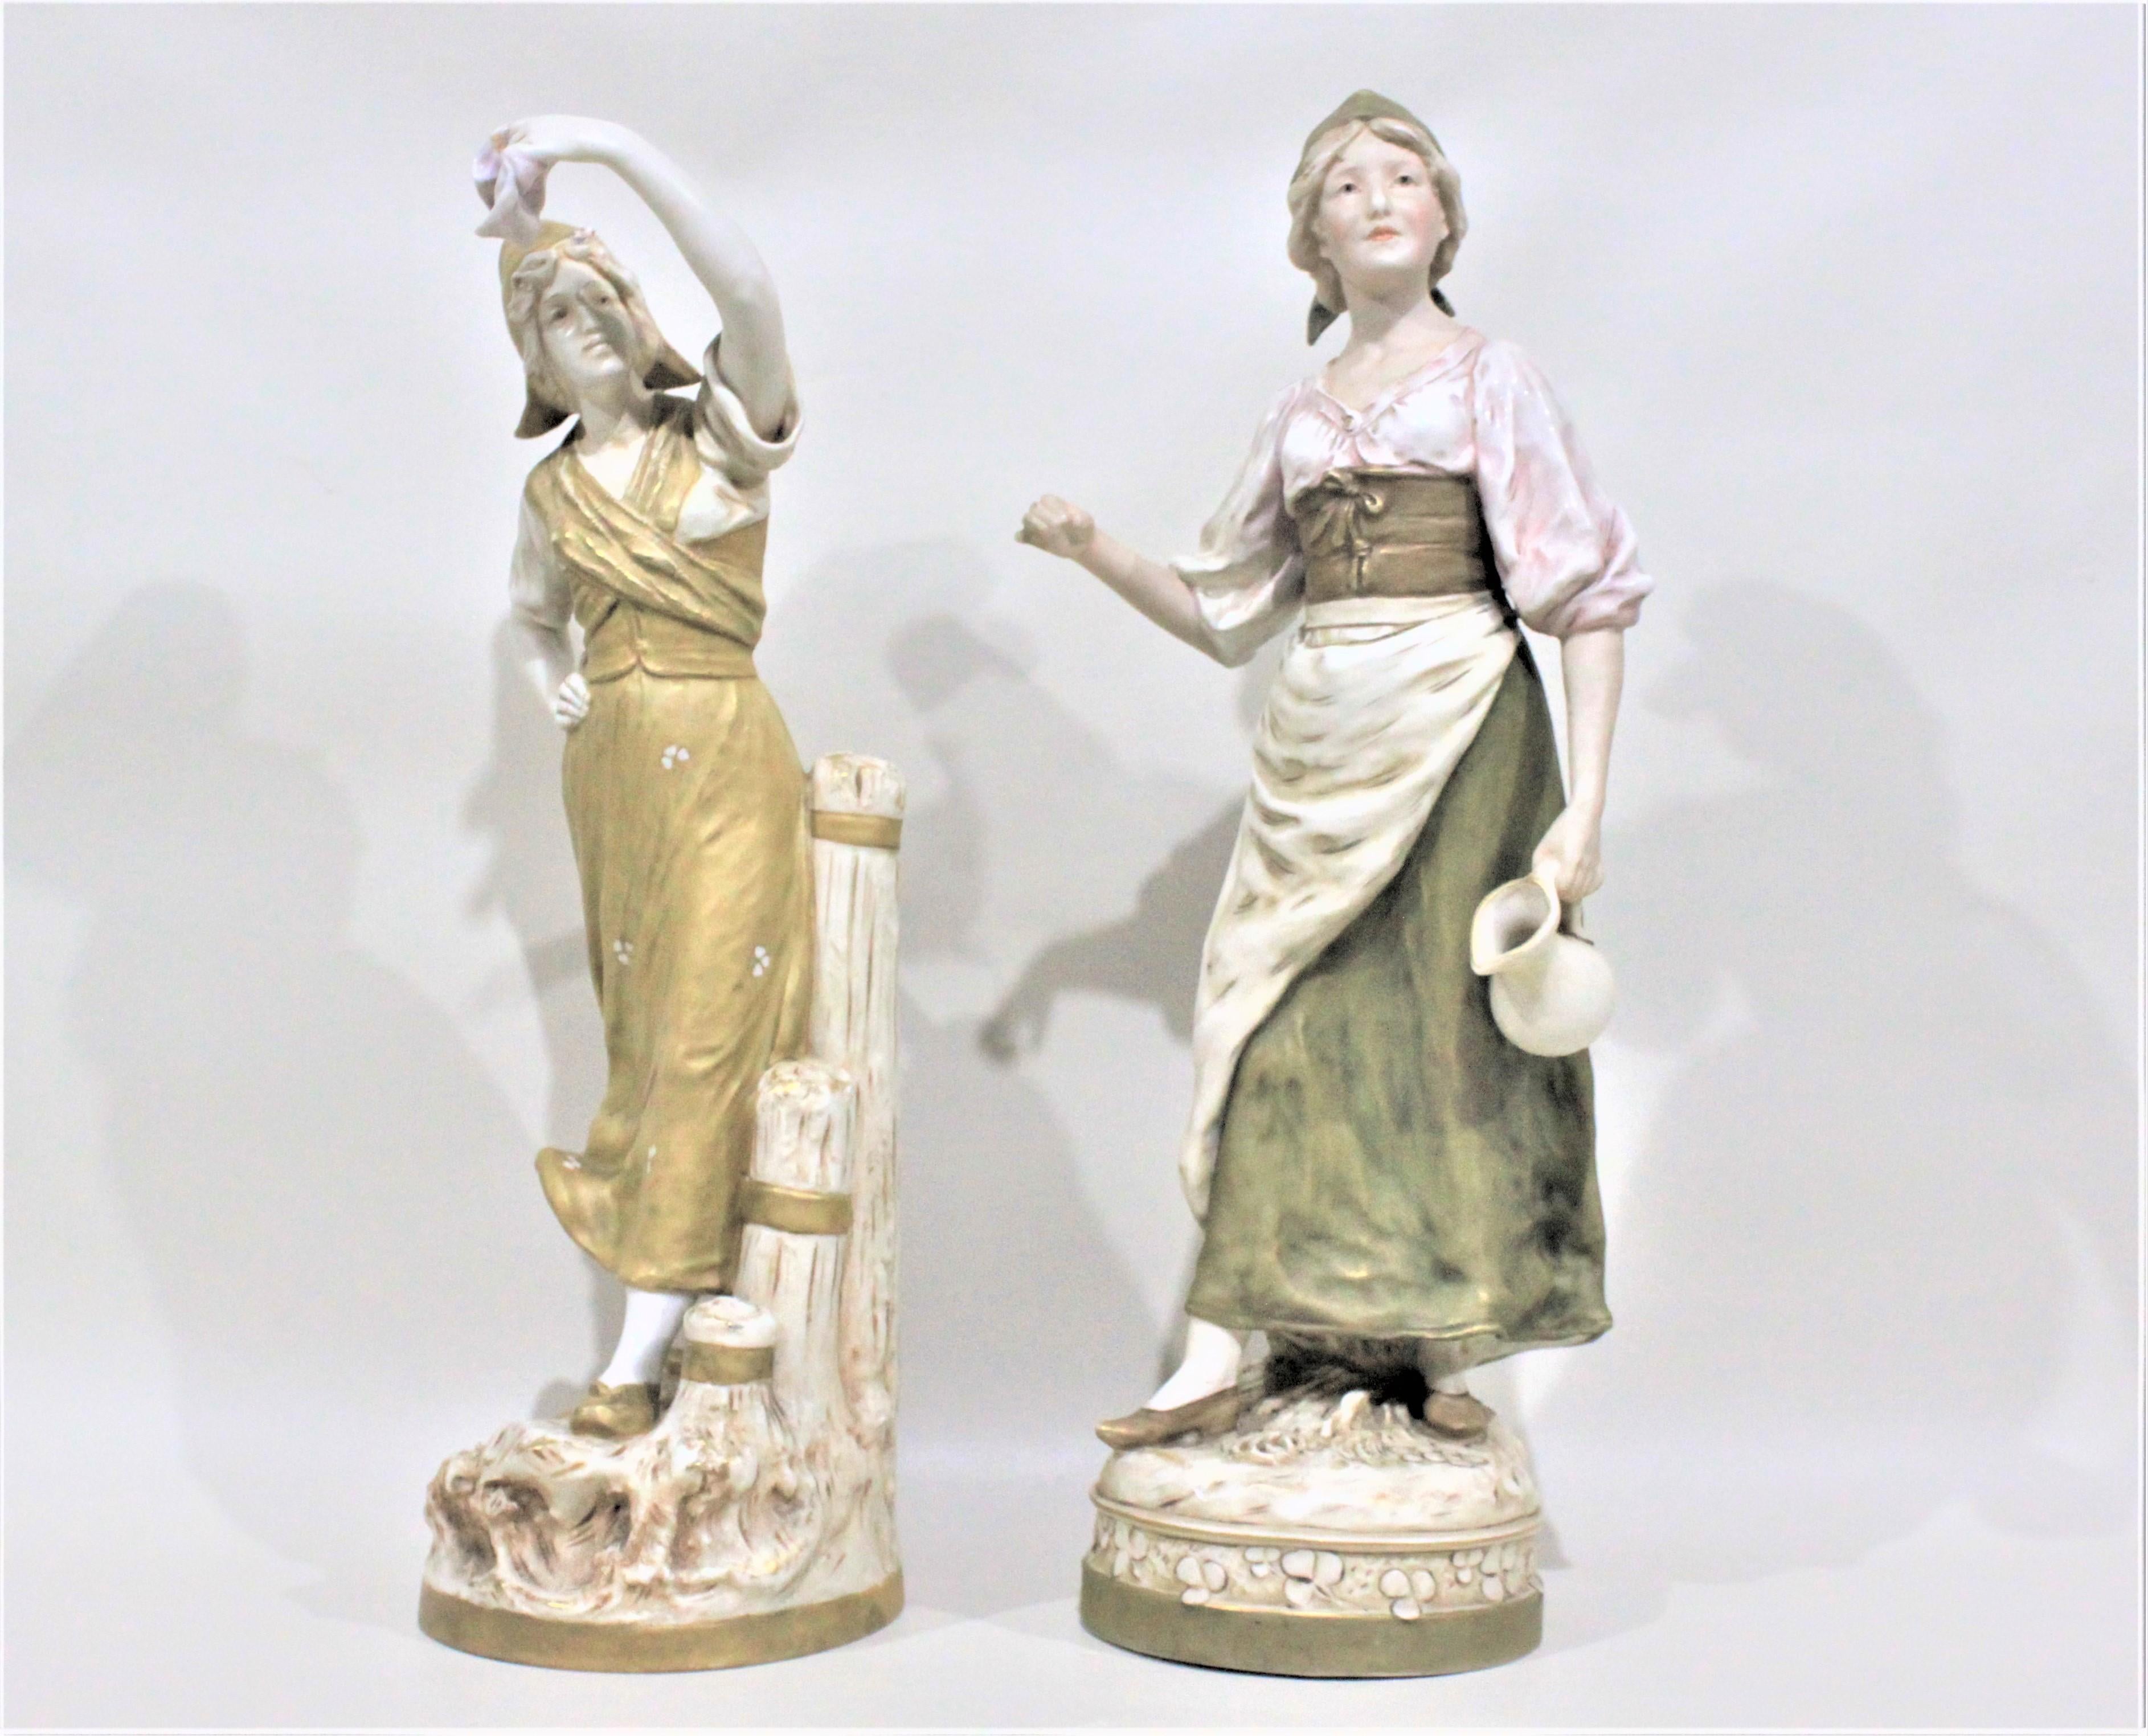 Pair of Antique Art Nouveau Royal Dux Porcelain Figurines In Good Condition For Sale In Hamilton, Ontario